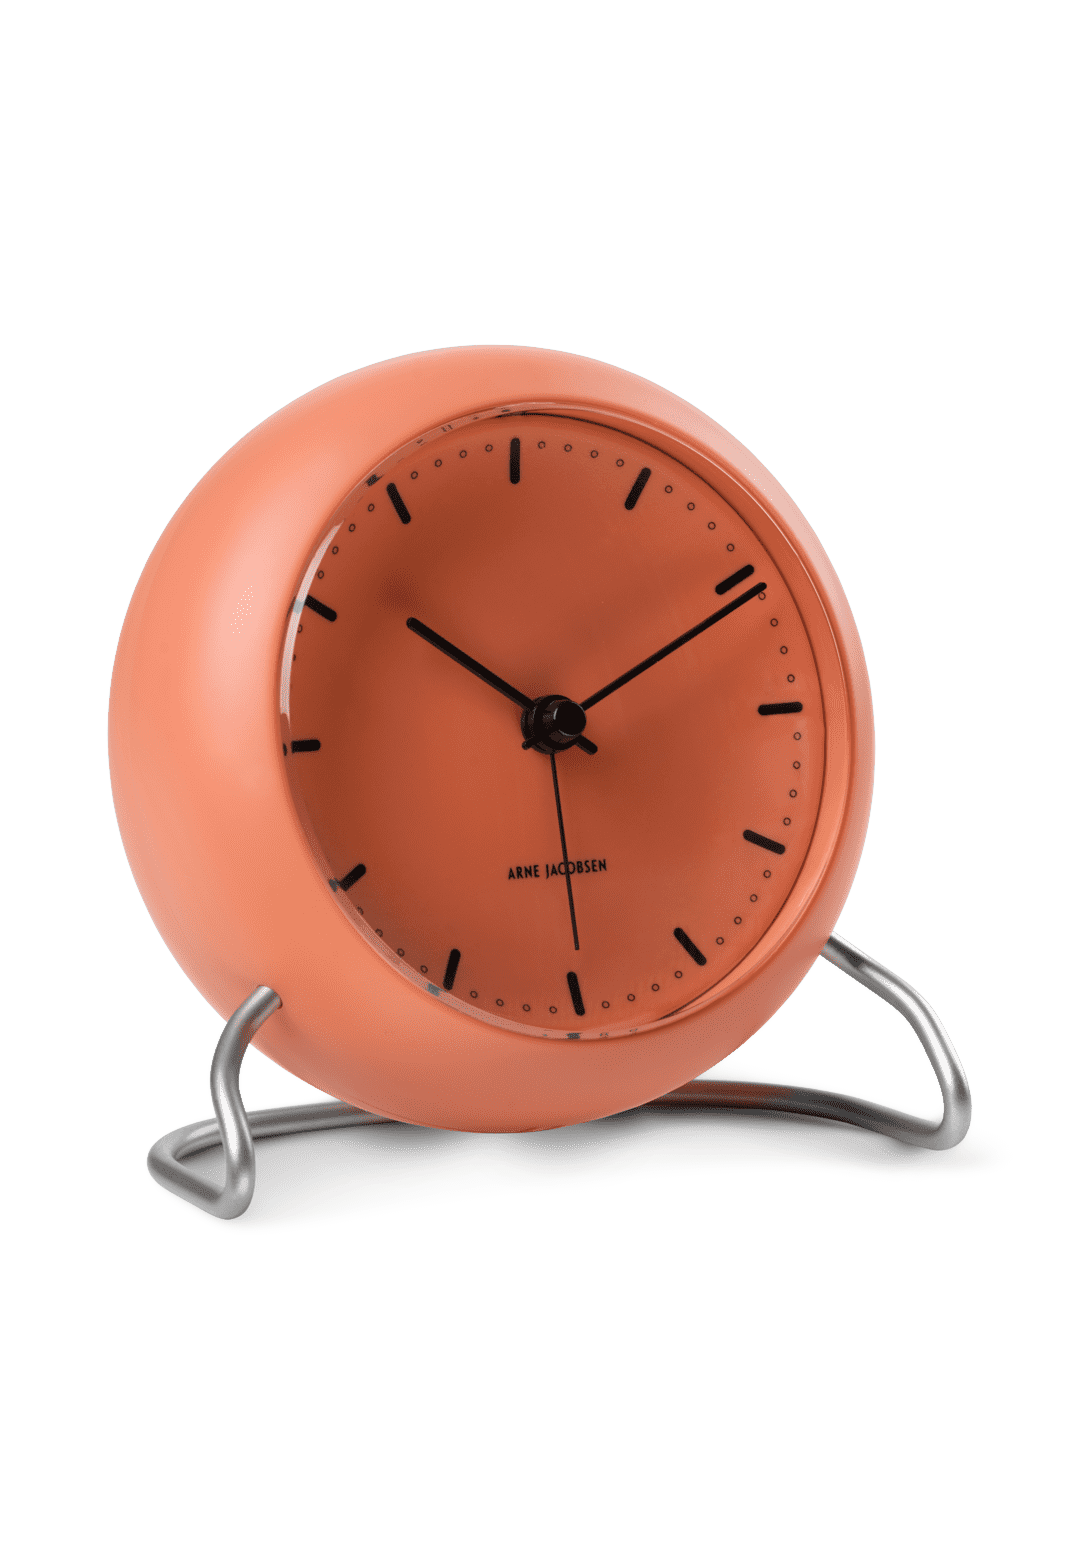 Arne Jacobsen City Hall Alarm Clock - Pale orange